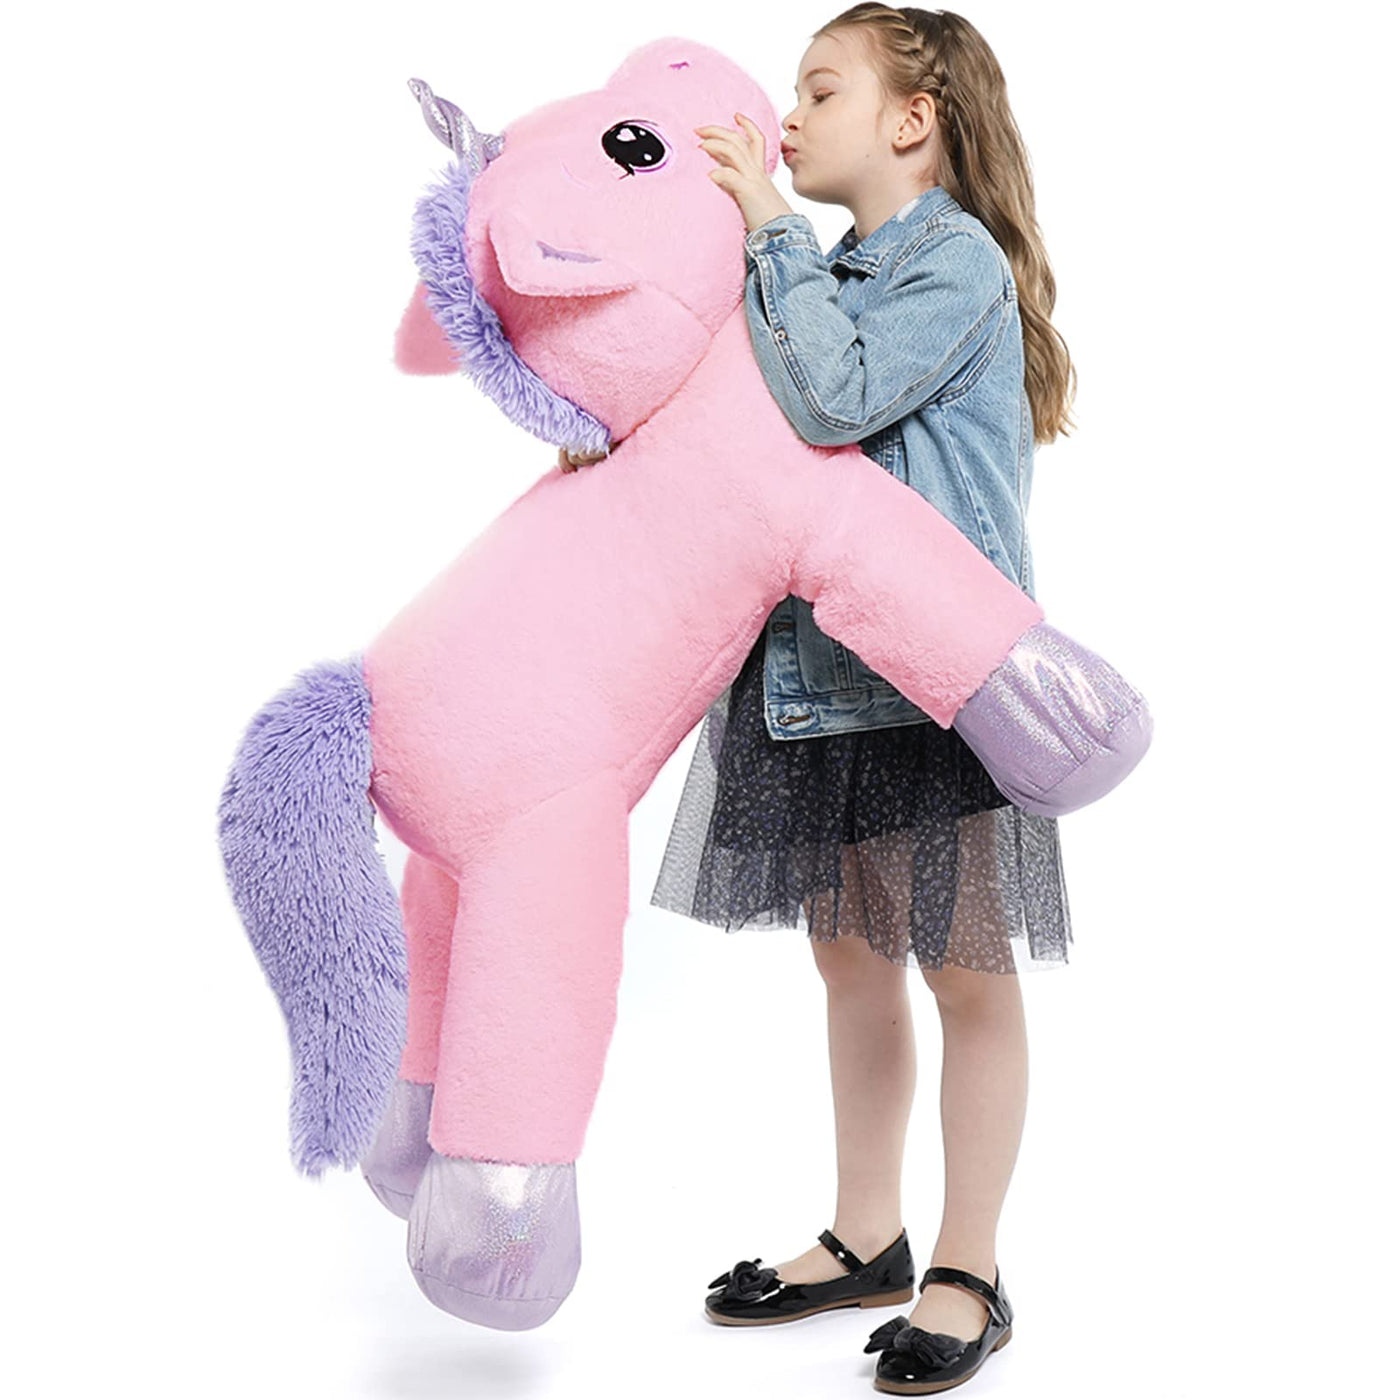 MorisMos Giant Unicorn Stuffed Animal Toy